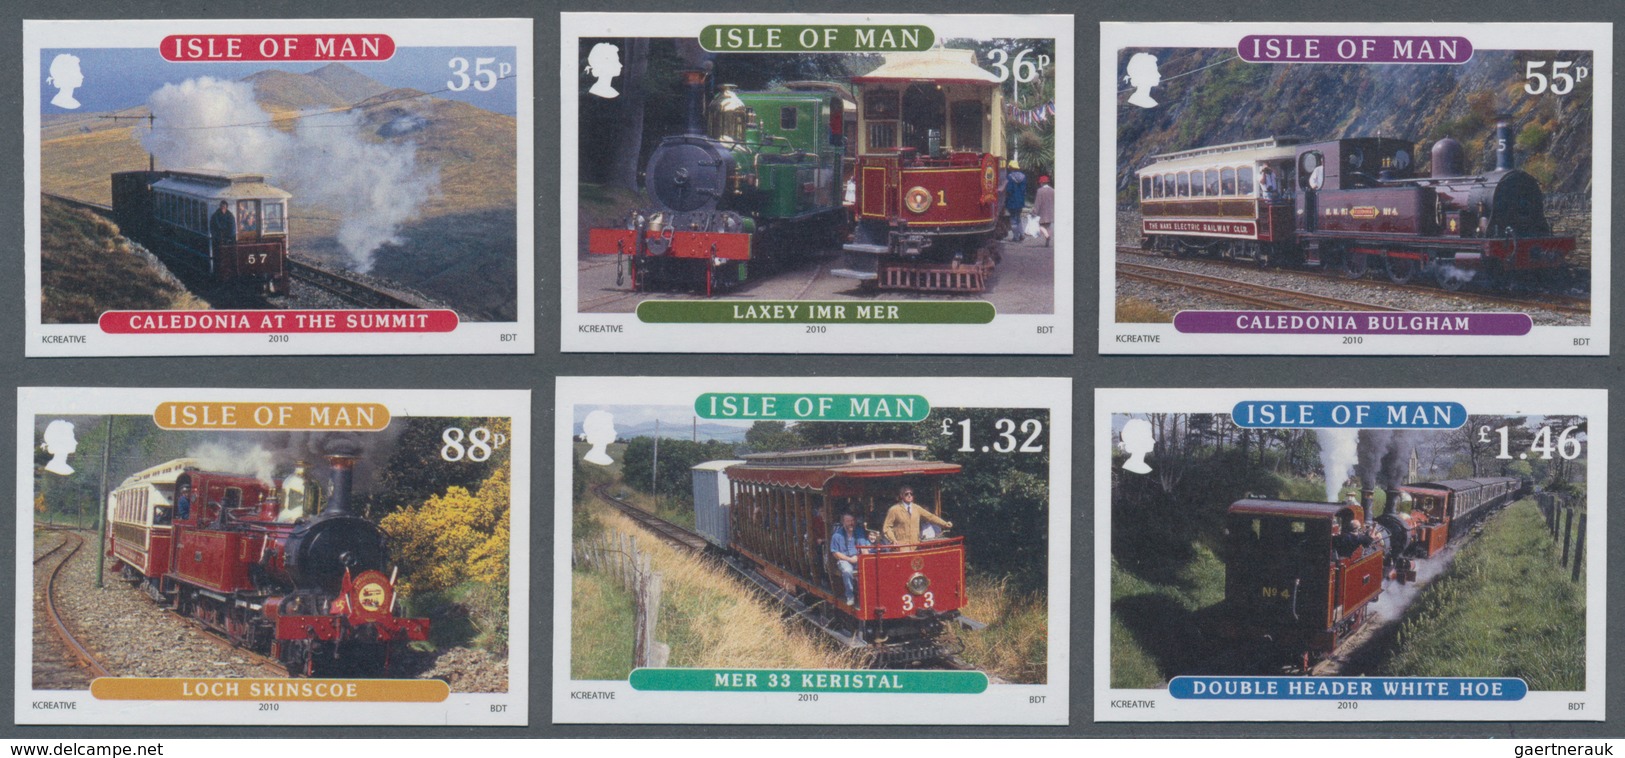 Großbritannien - Isle Of Man: 2010. Complete Set "Railways Of The Isle Of Man" (6 Values) In IMPERFO - Man (Insel)